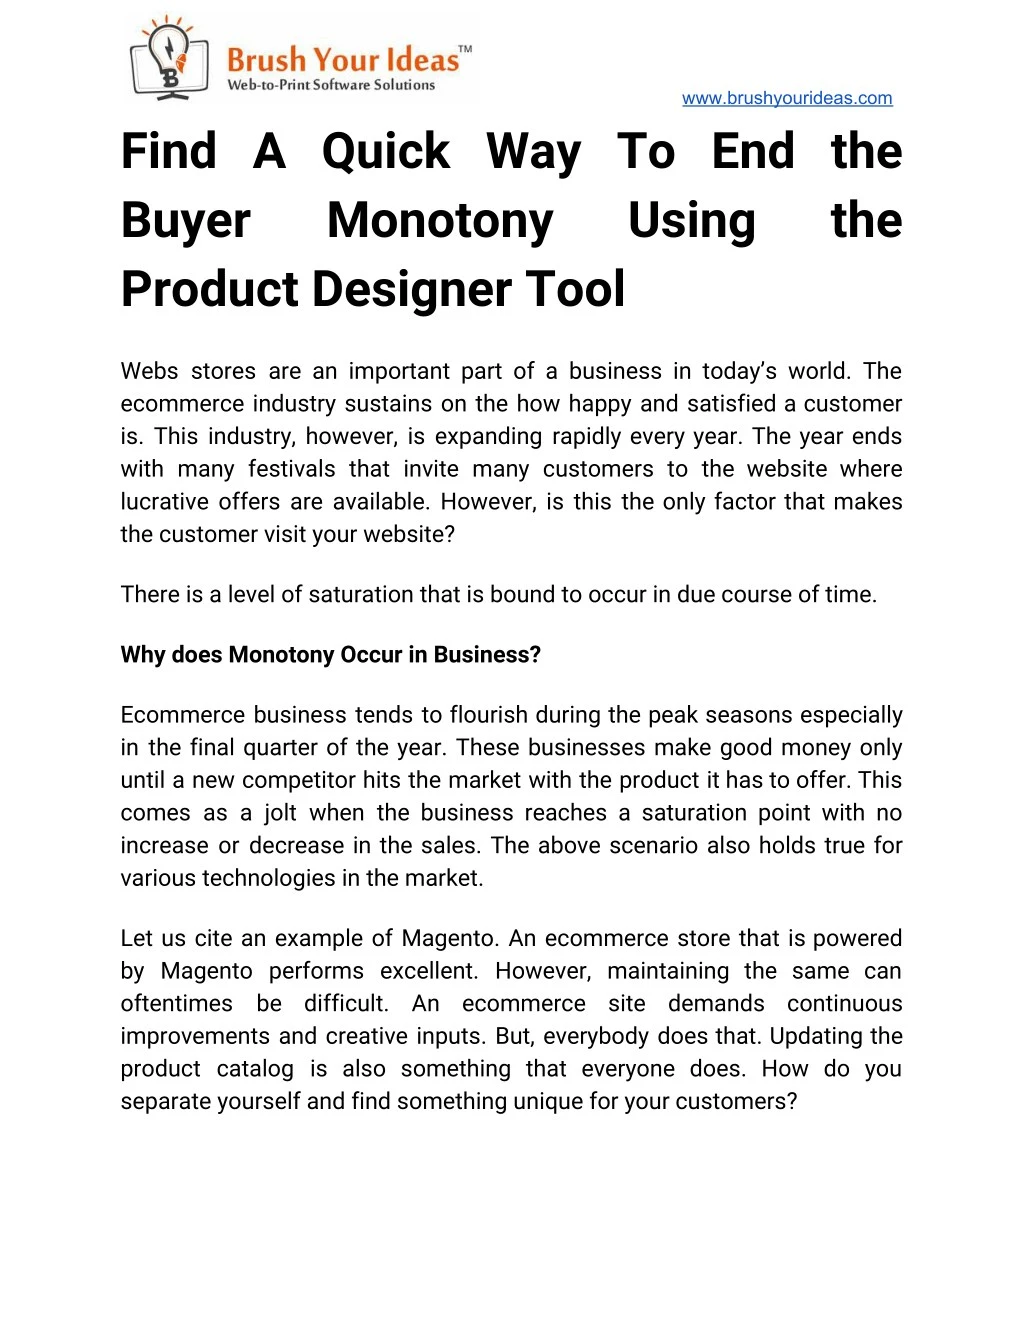 www brushyourideas com monotony product designer